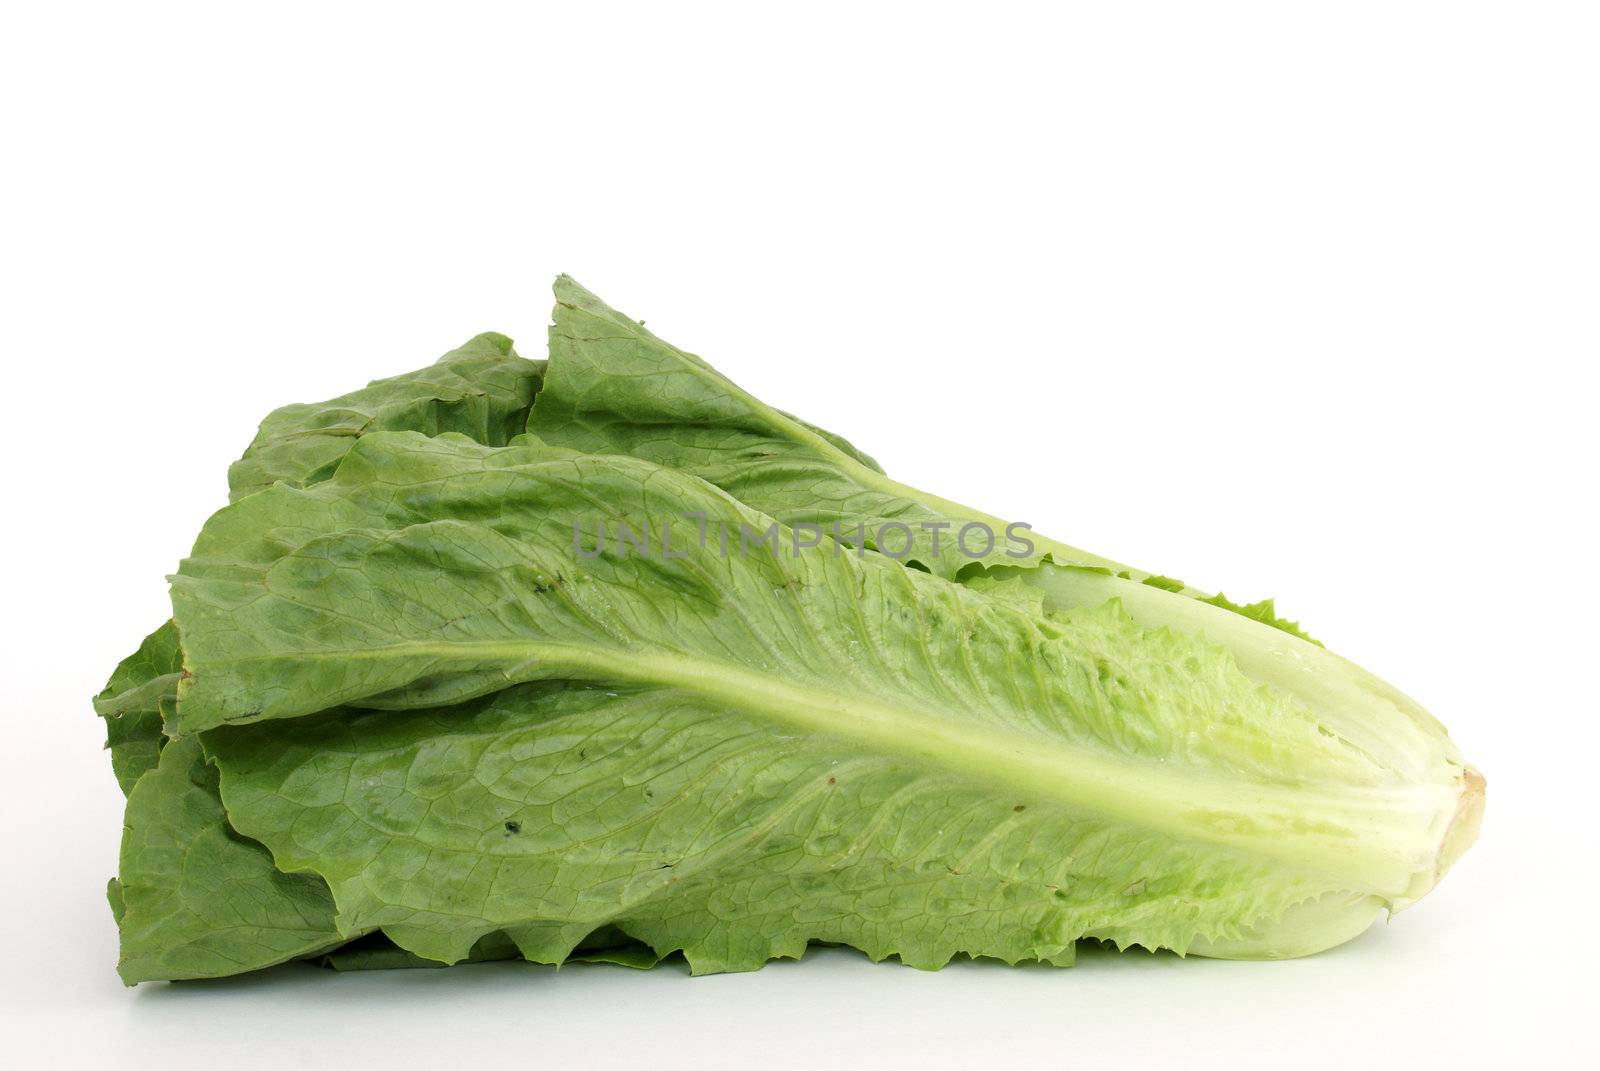 A fresh head of Romaine lettuce on white background.